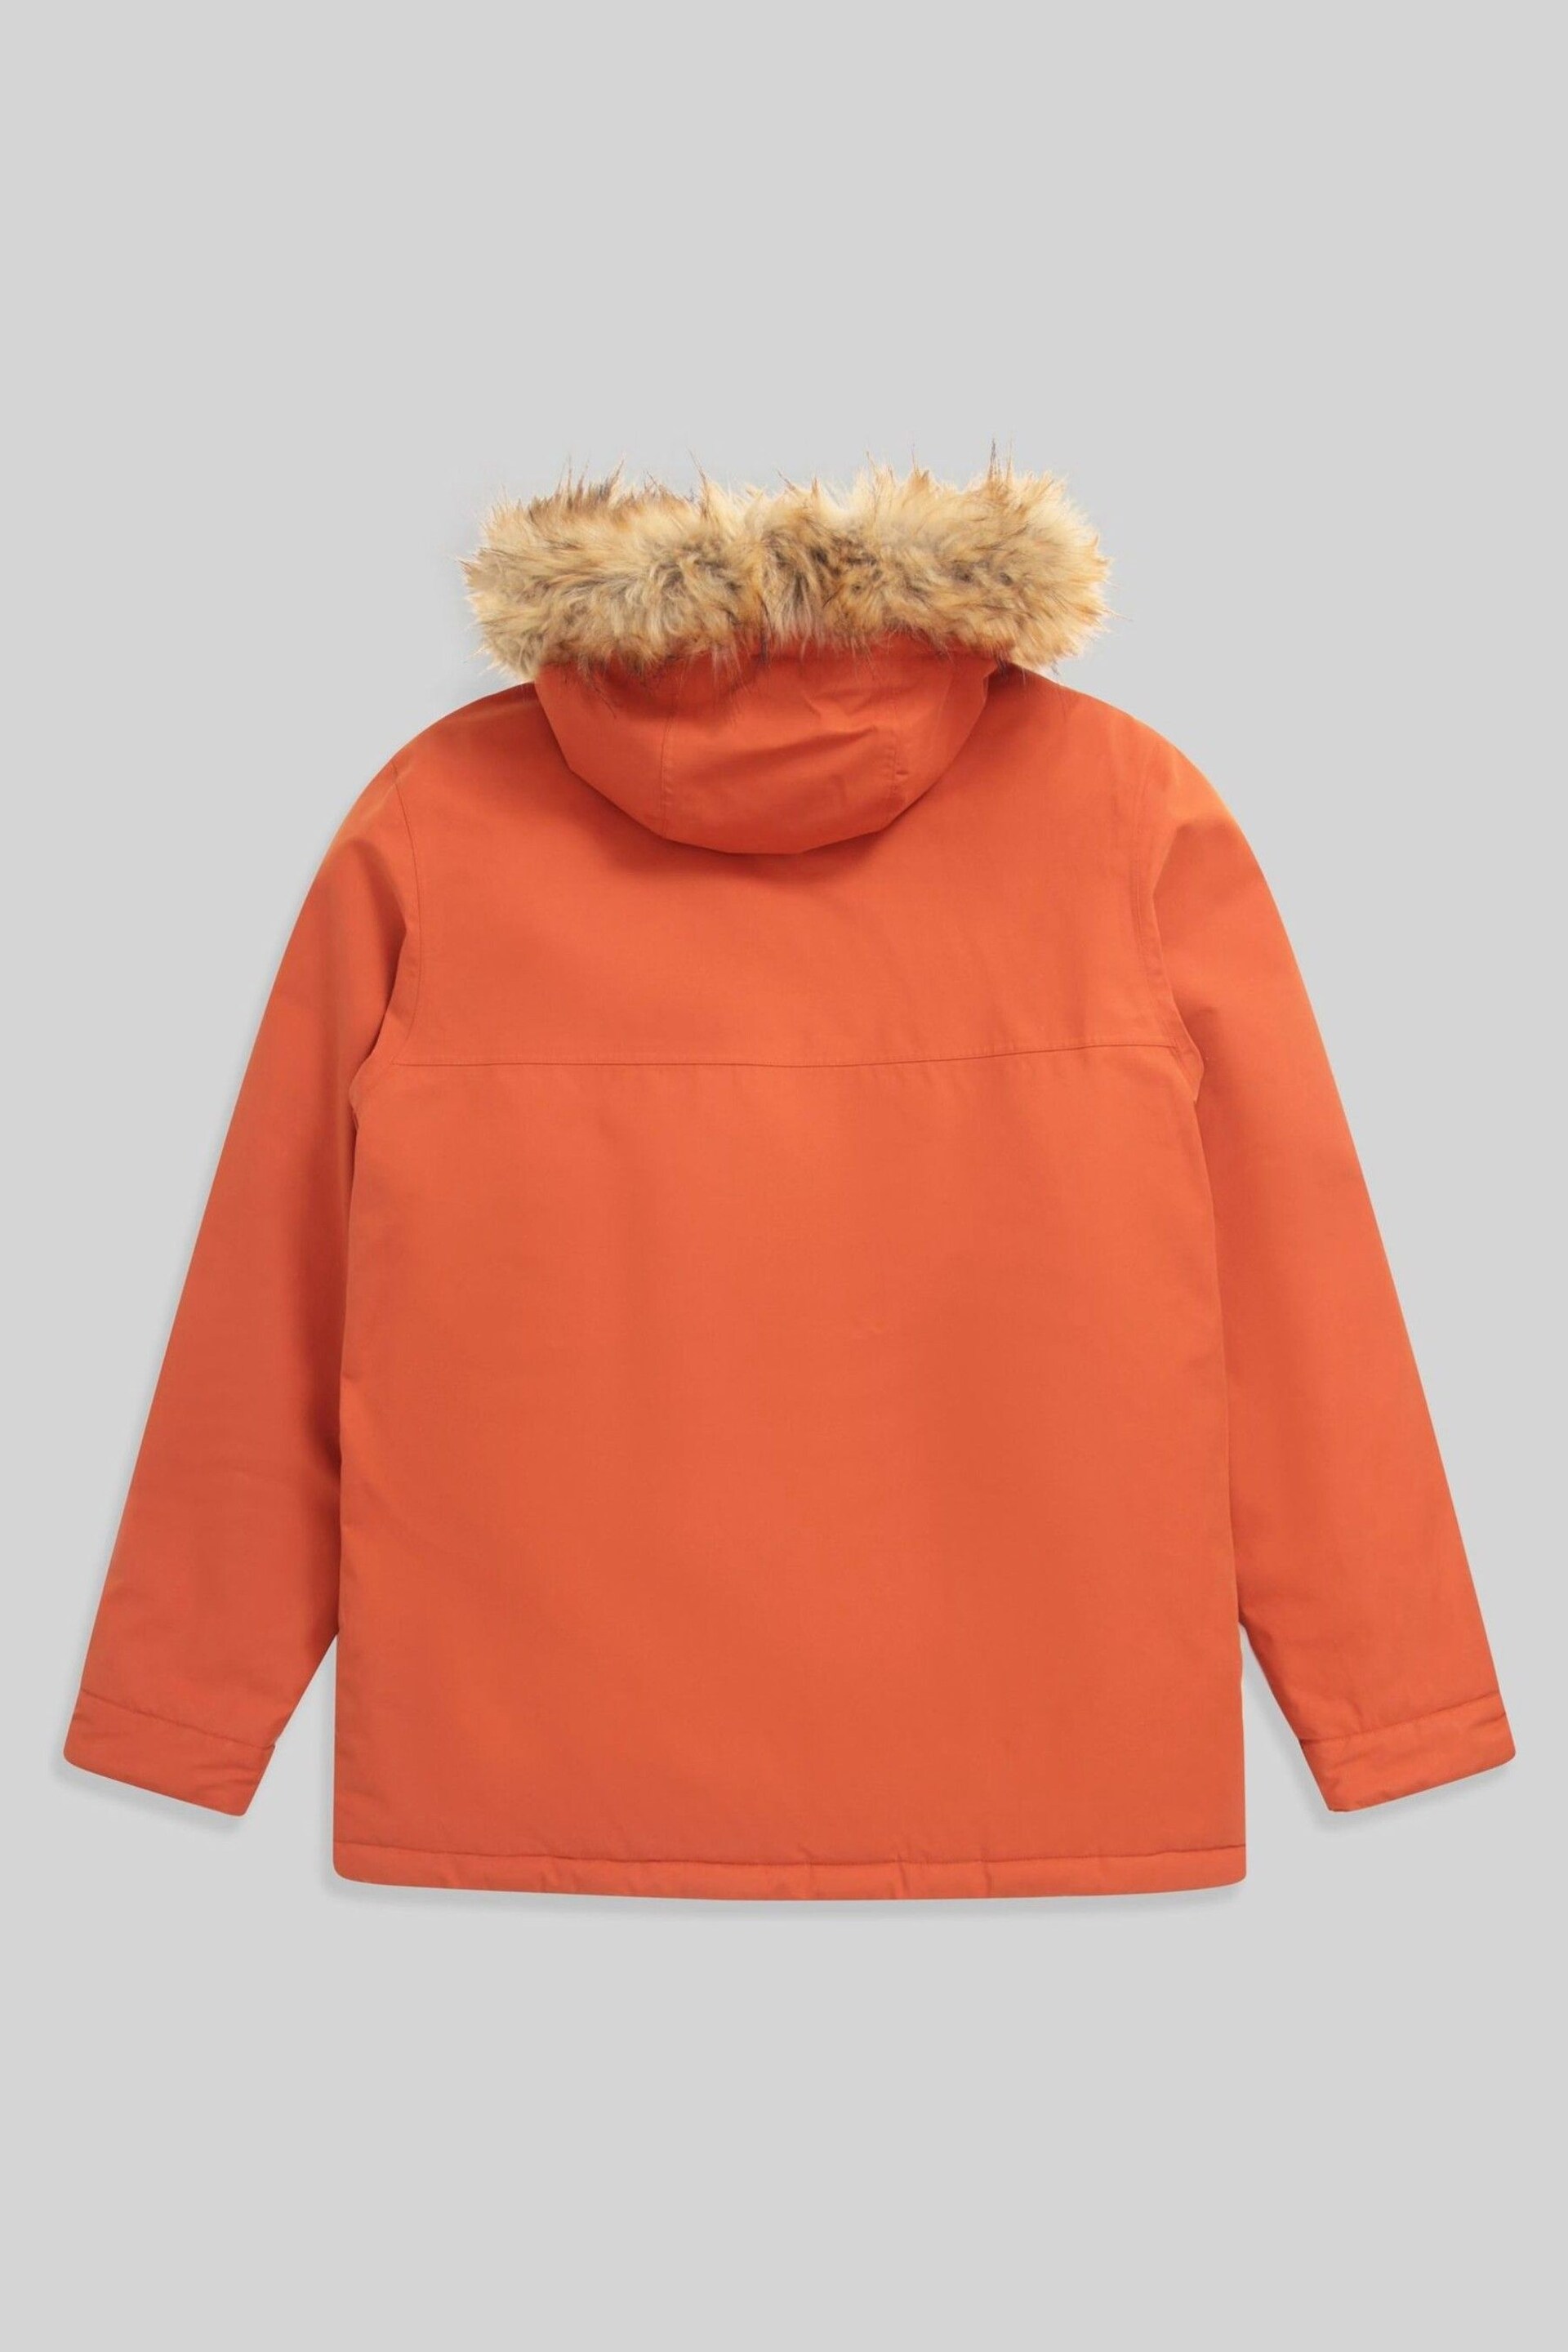 Animal Mens Orange Whitsand Sherpa Zip Jacket - Image 6 of 9